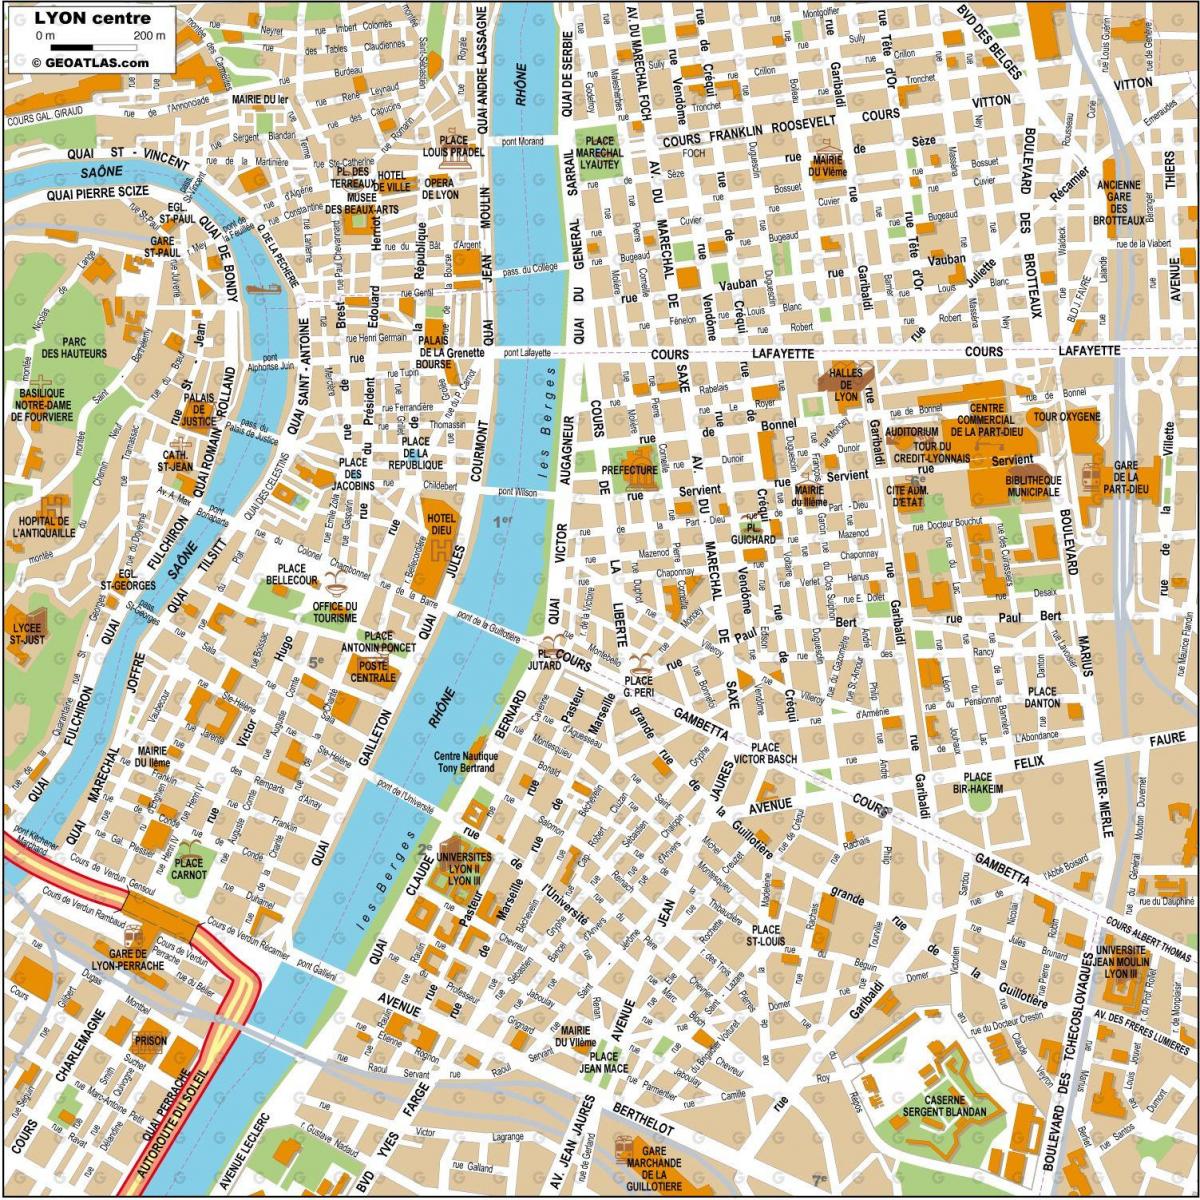 Lyon stadscentrum kaart